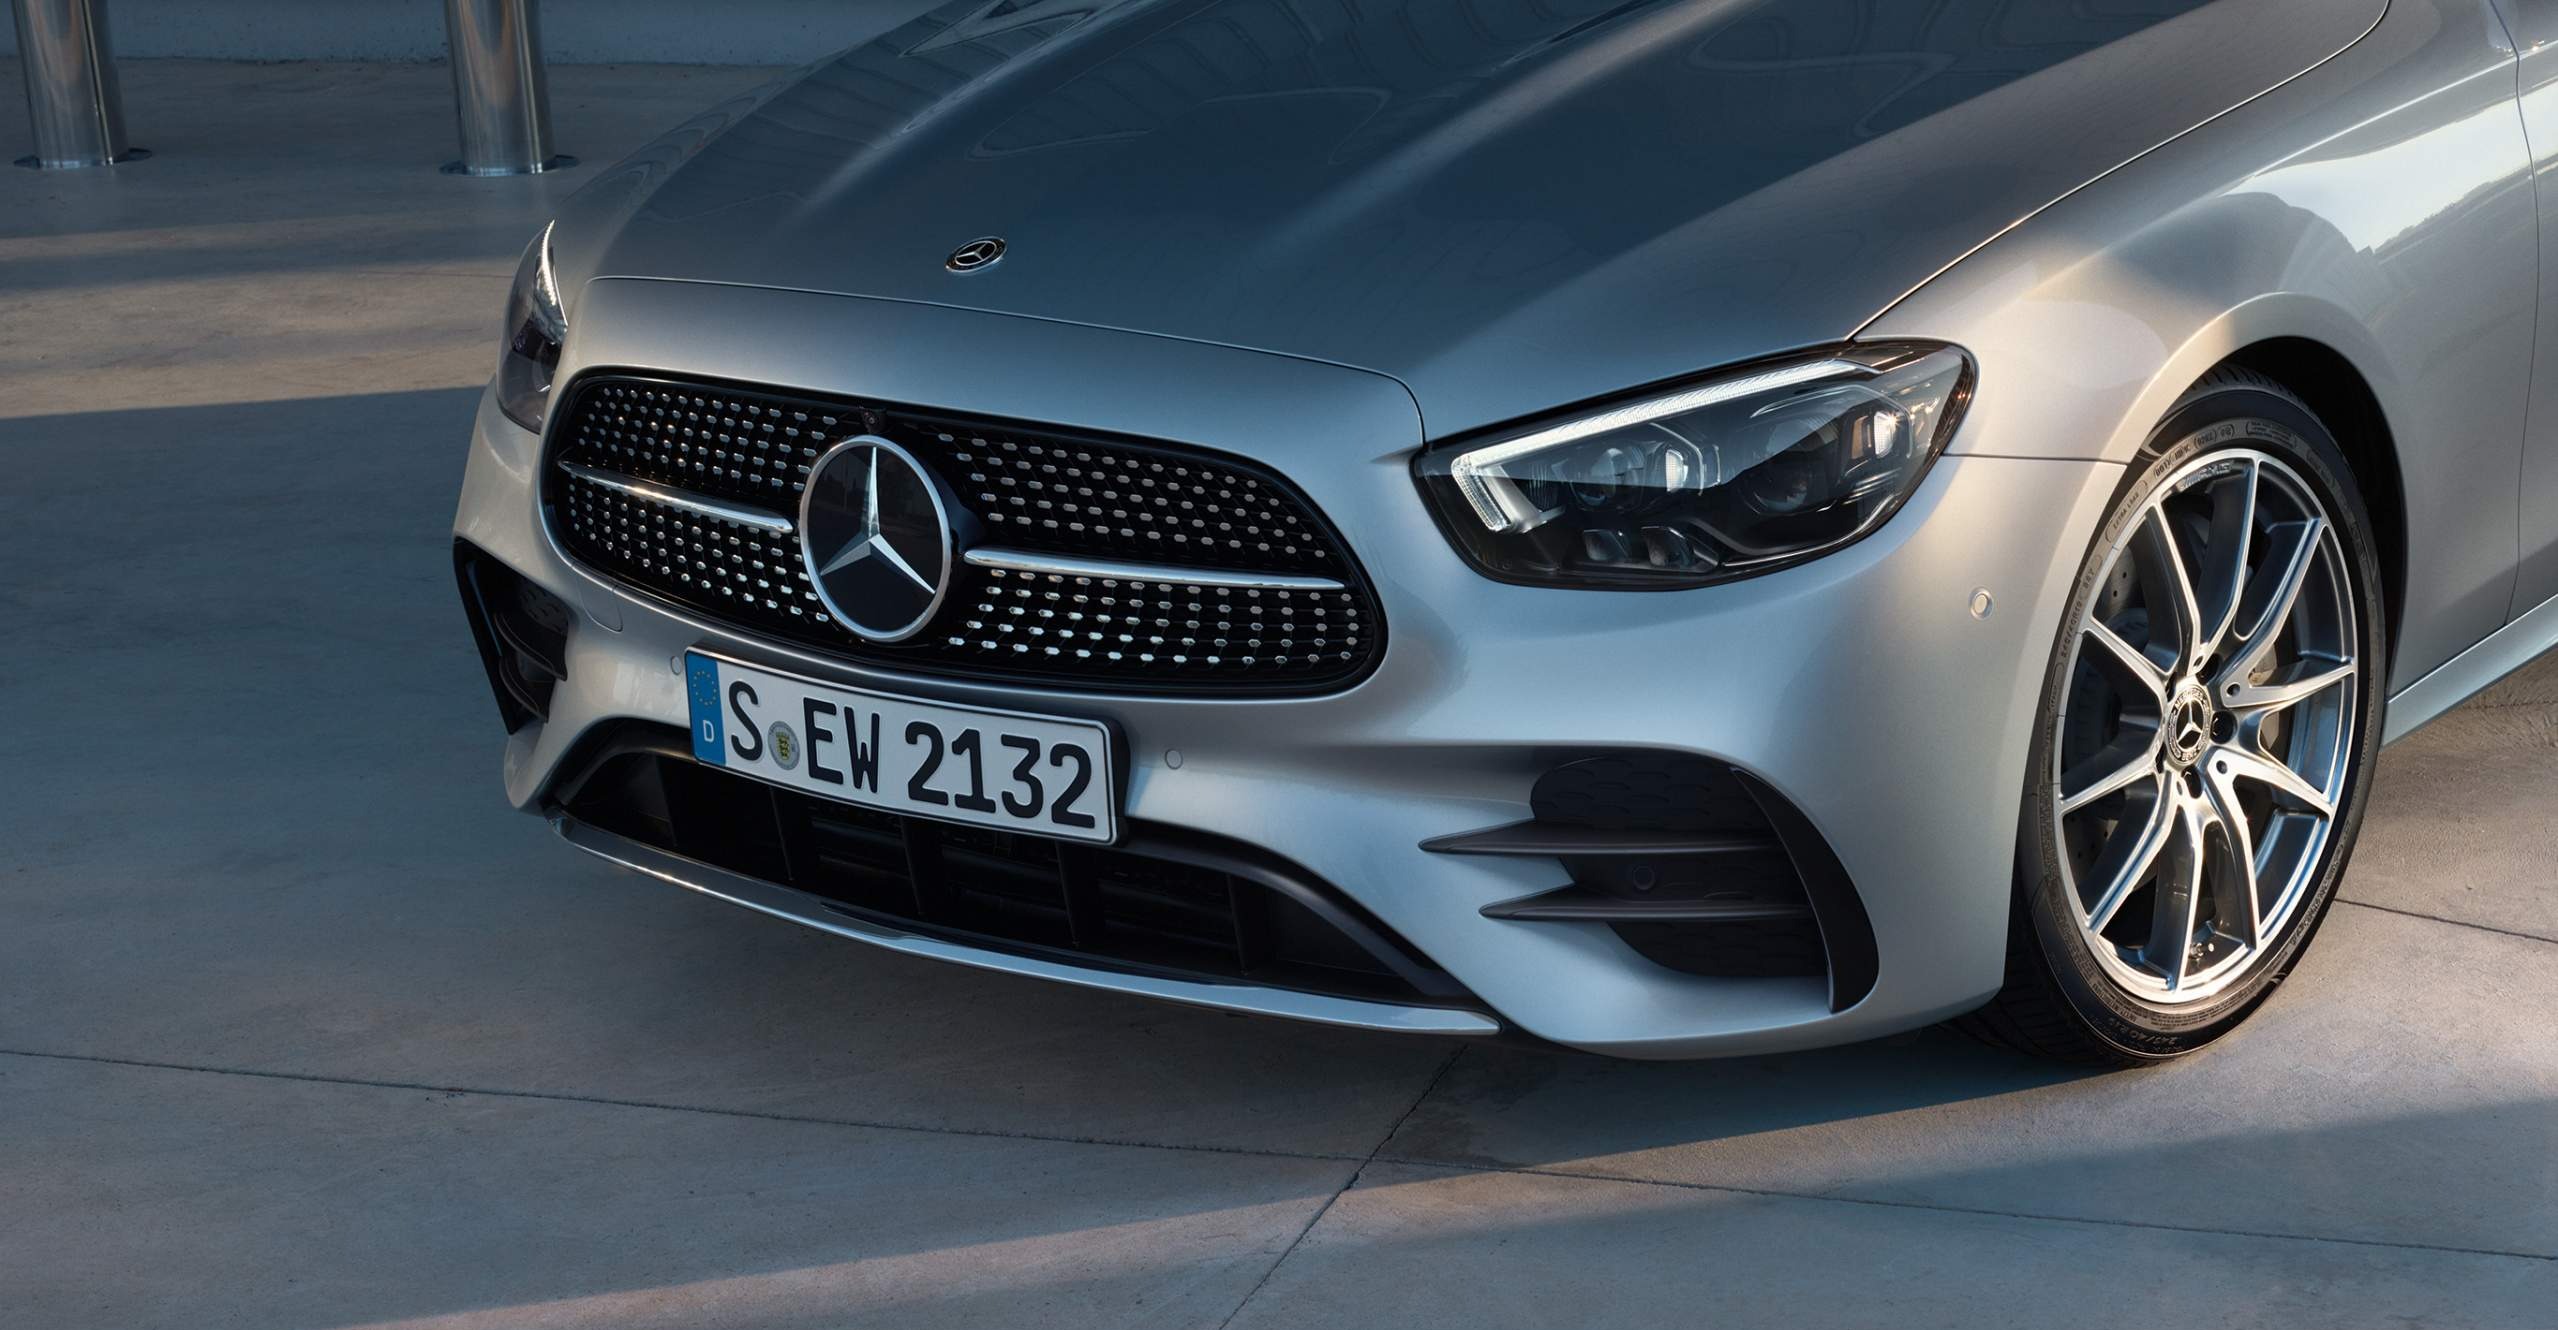 Mercedes-Benz Classe A: dimensioni, interni, motori, prezzi e concorrenti -  AutoScout24